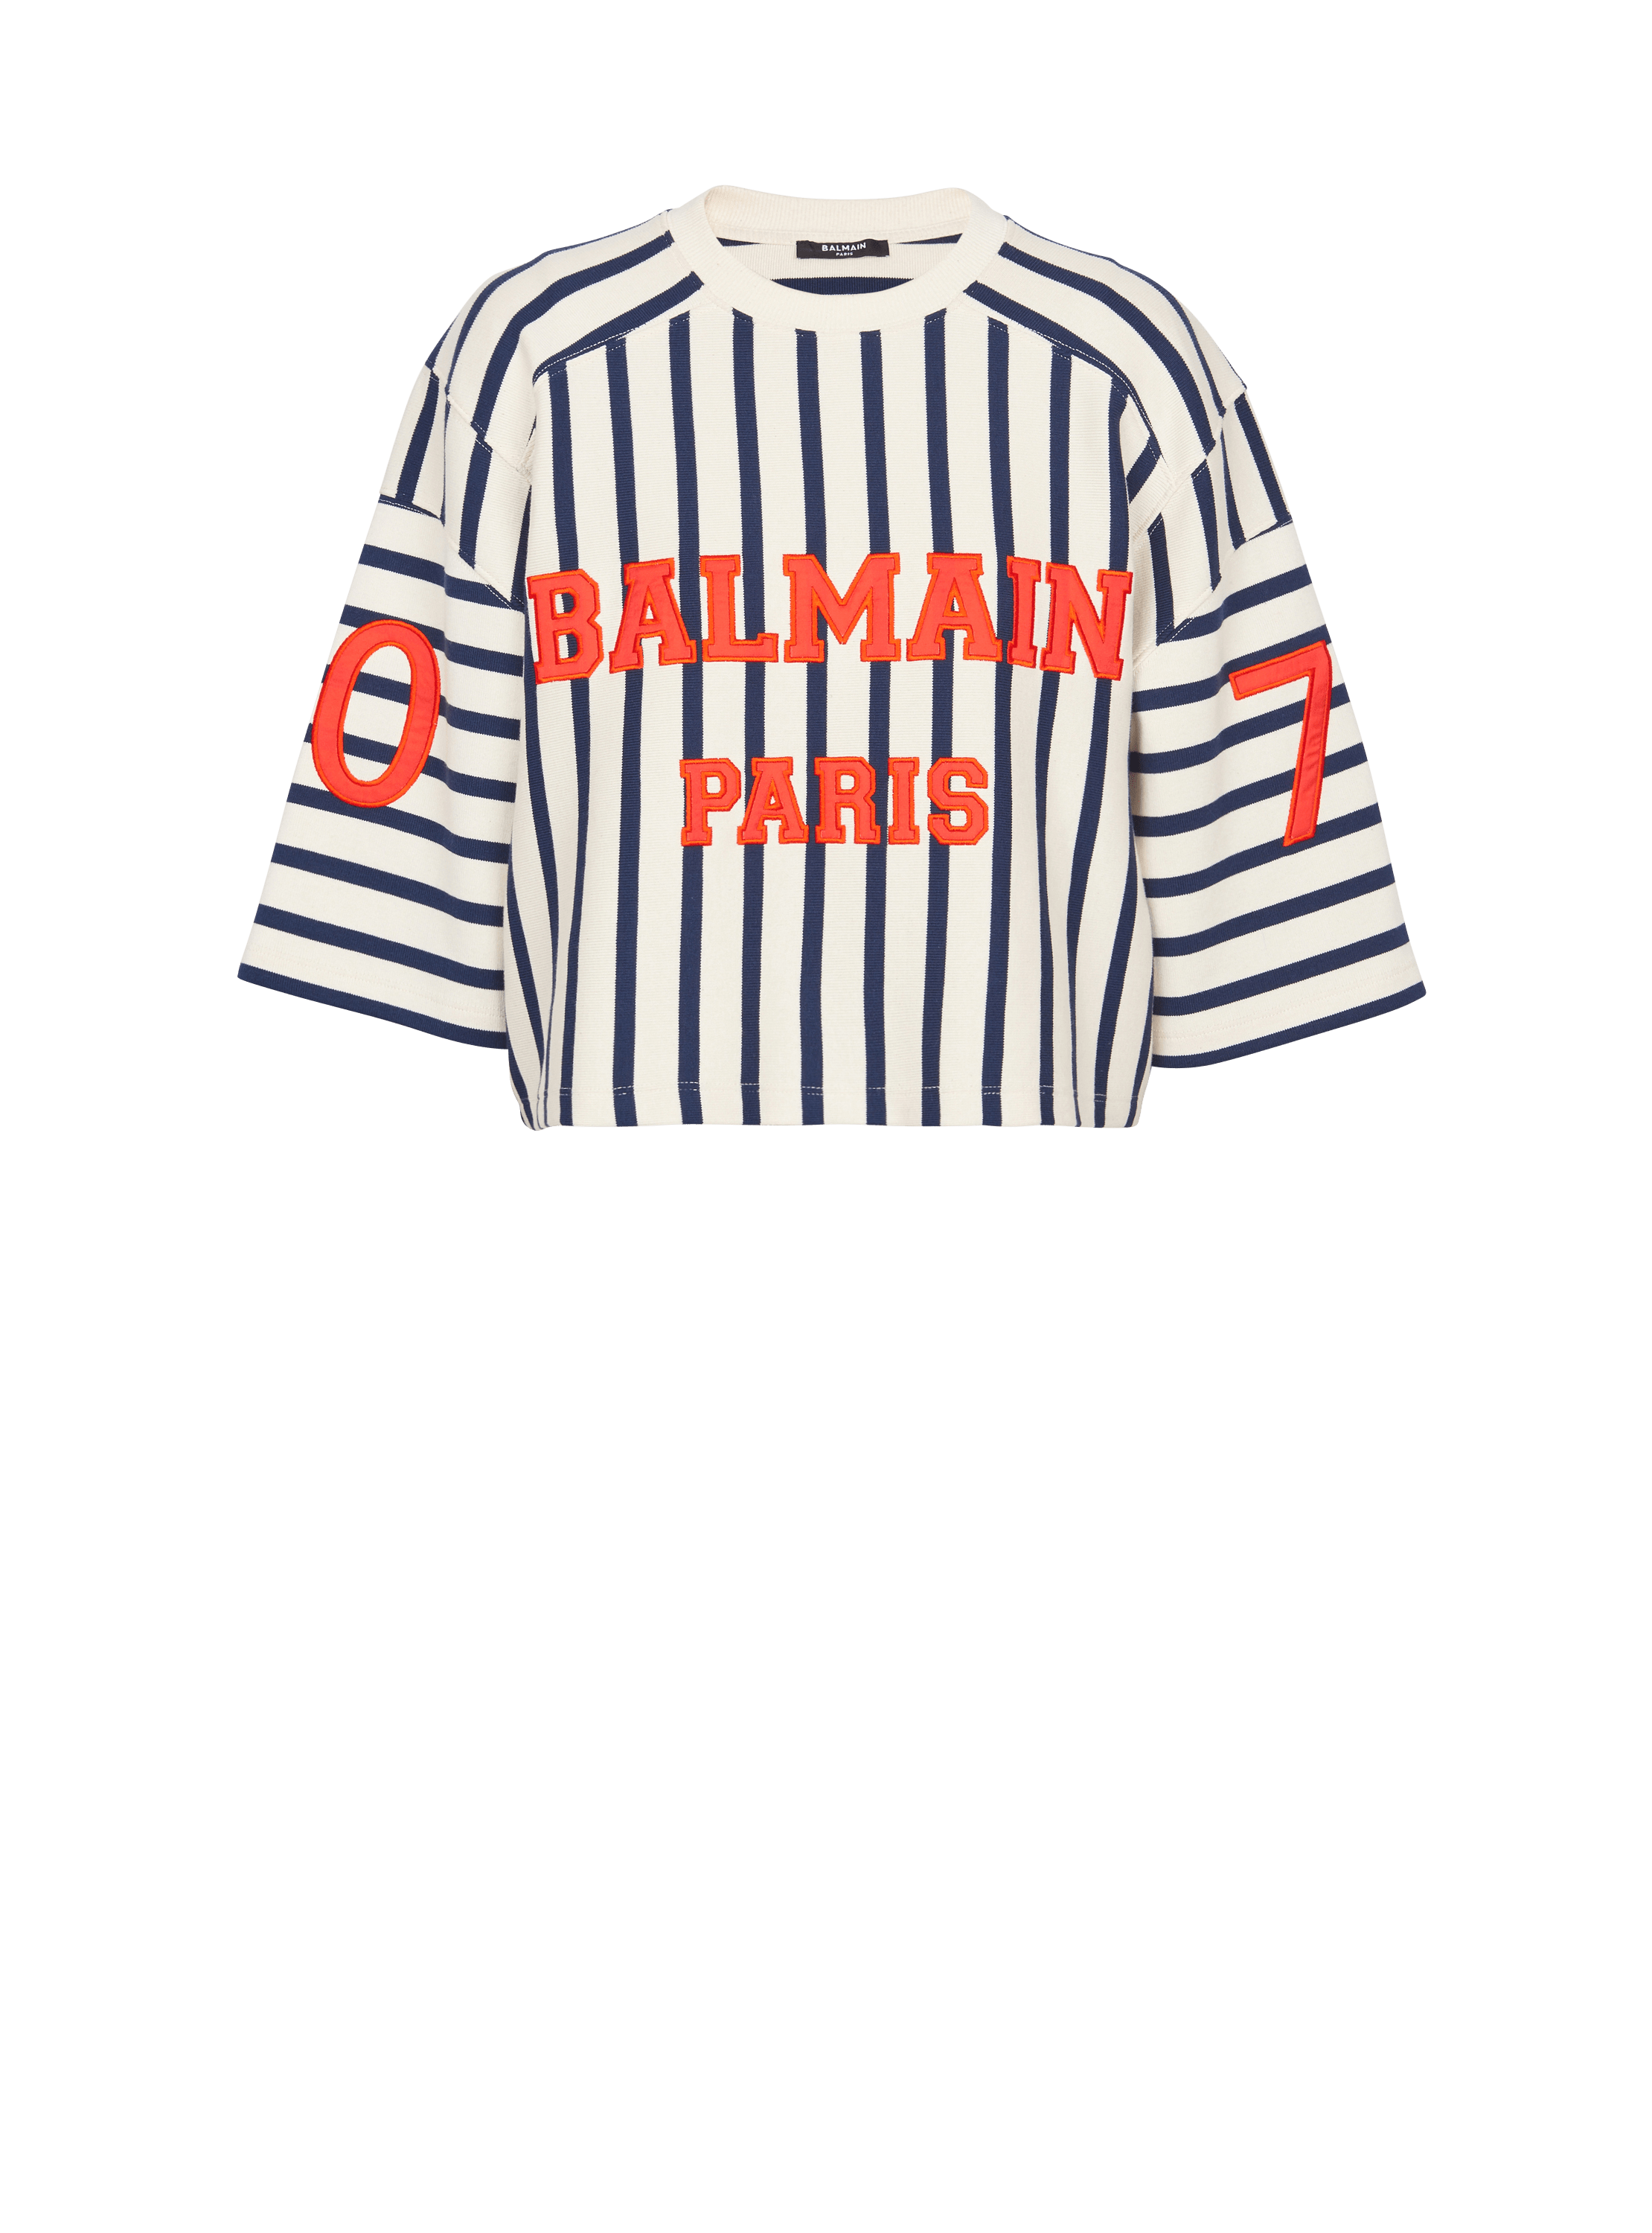 Kurzes Balmain Baseball-T-Shirt, multicolor, hi-res